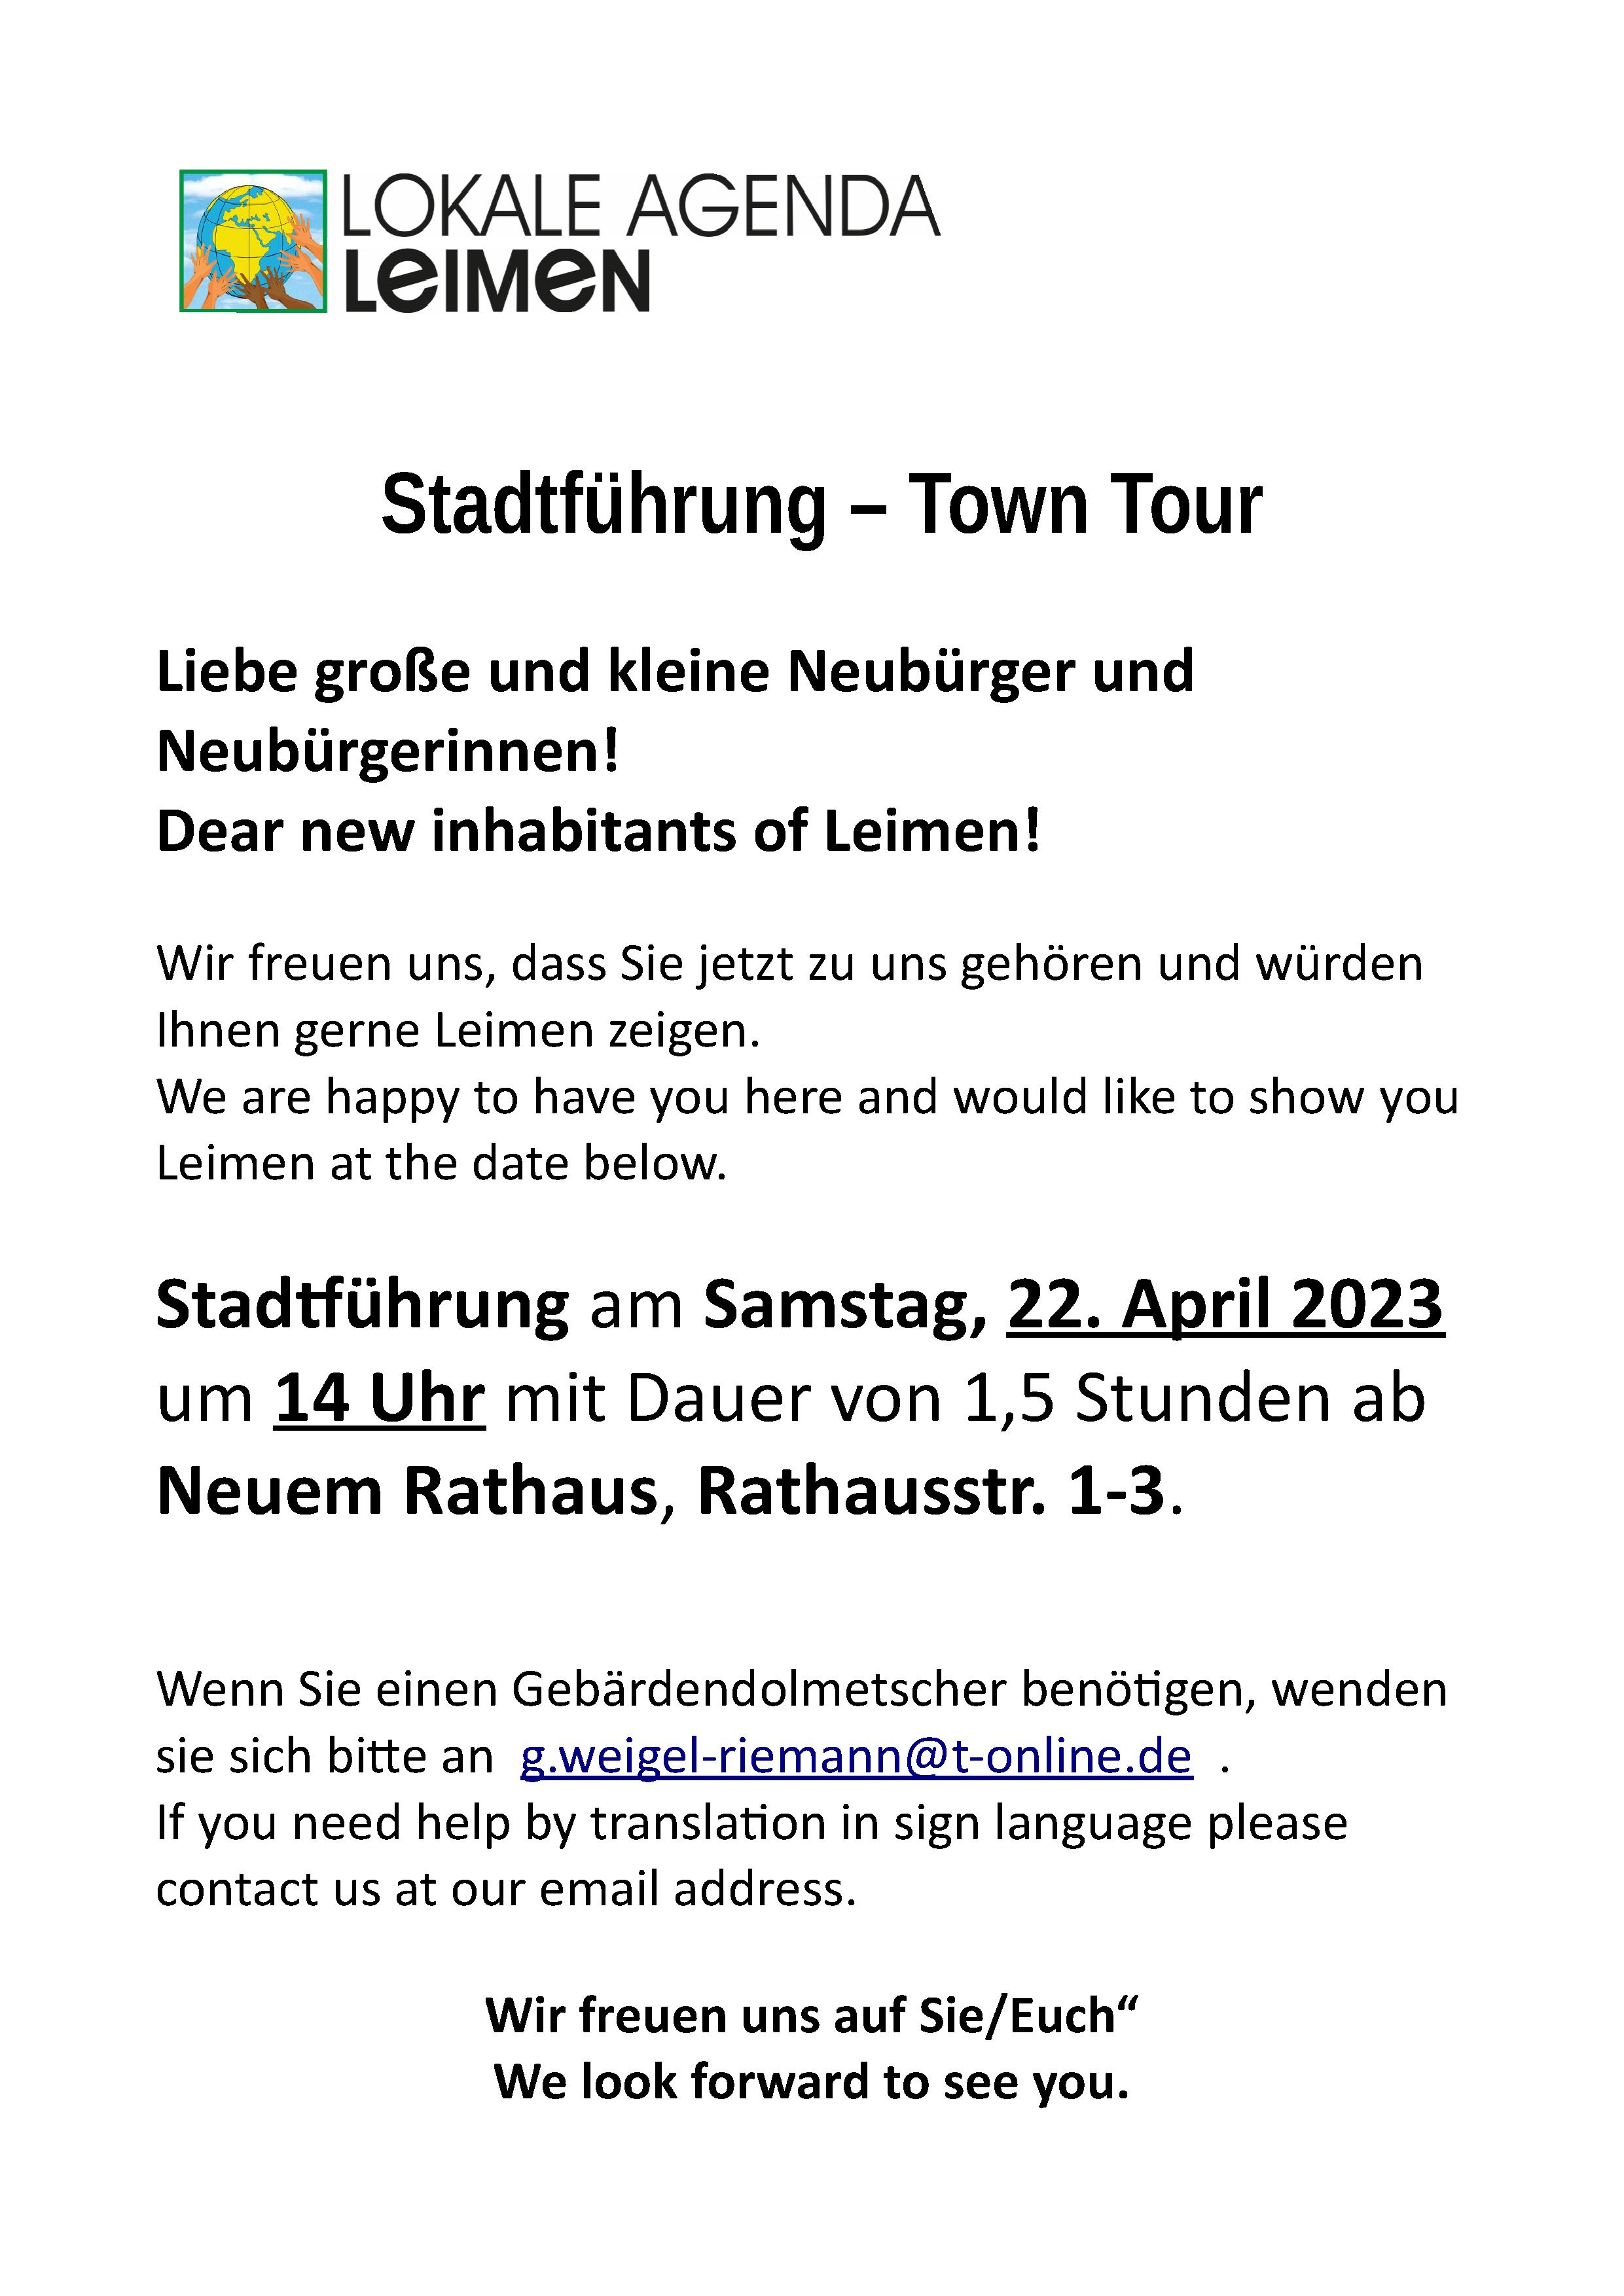 Stadtführung - Town Tour - Lokale Agenda Leimen